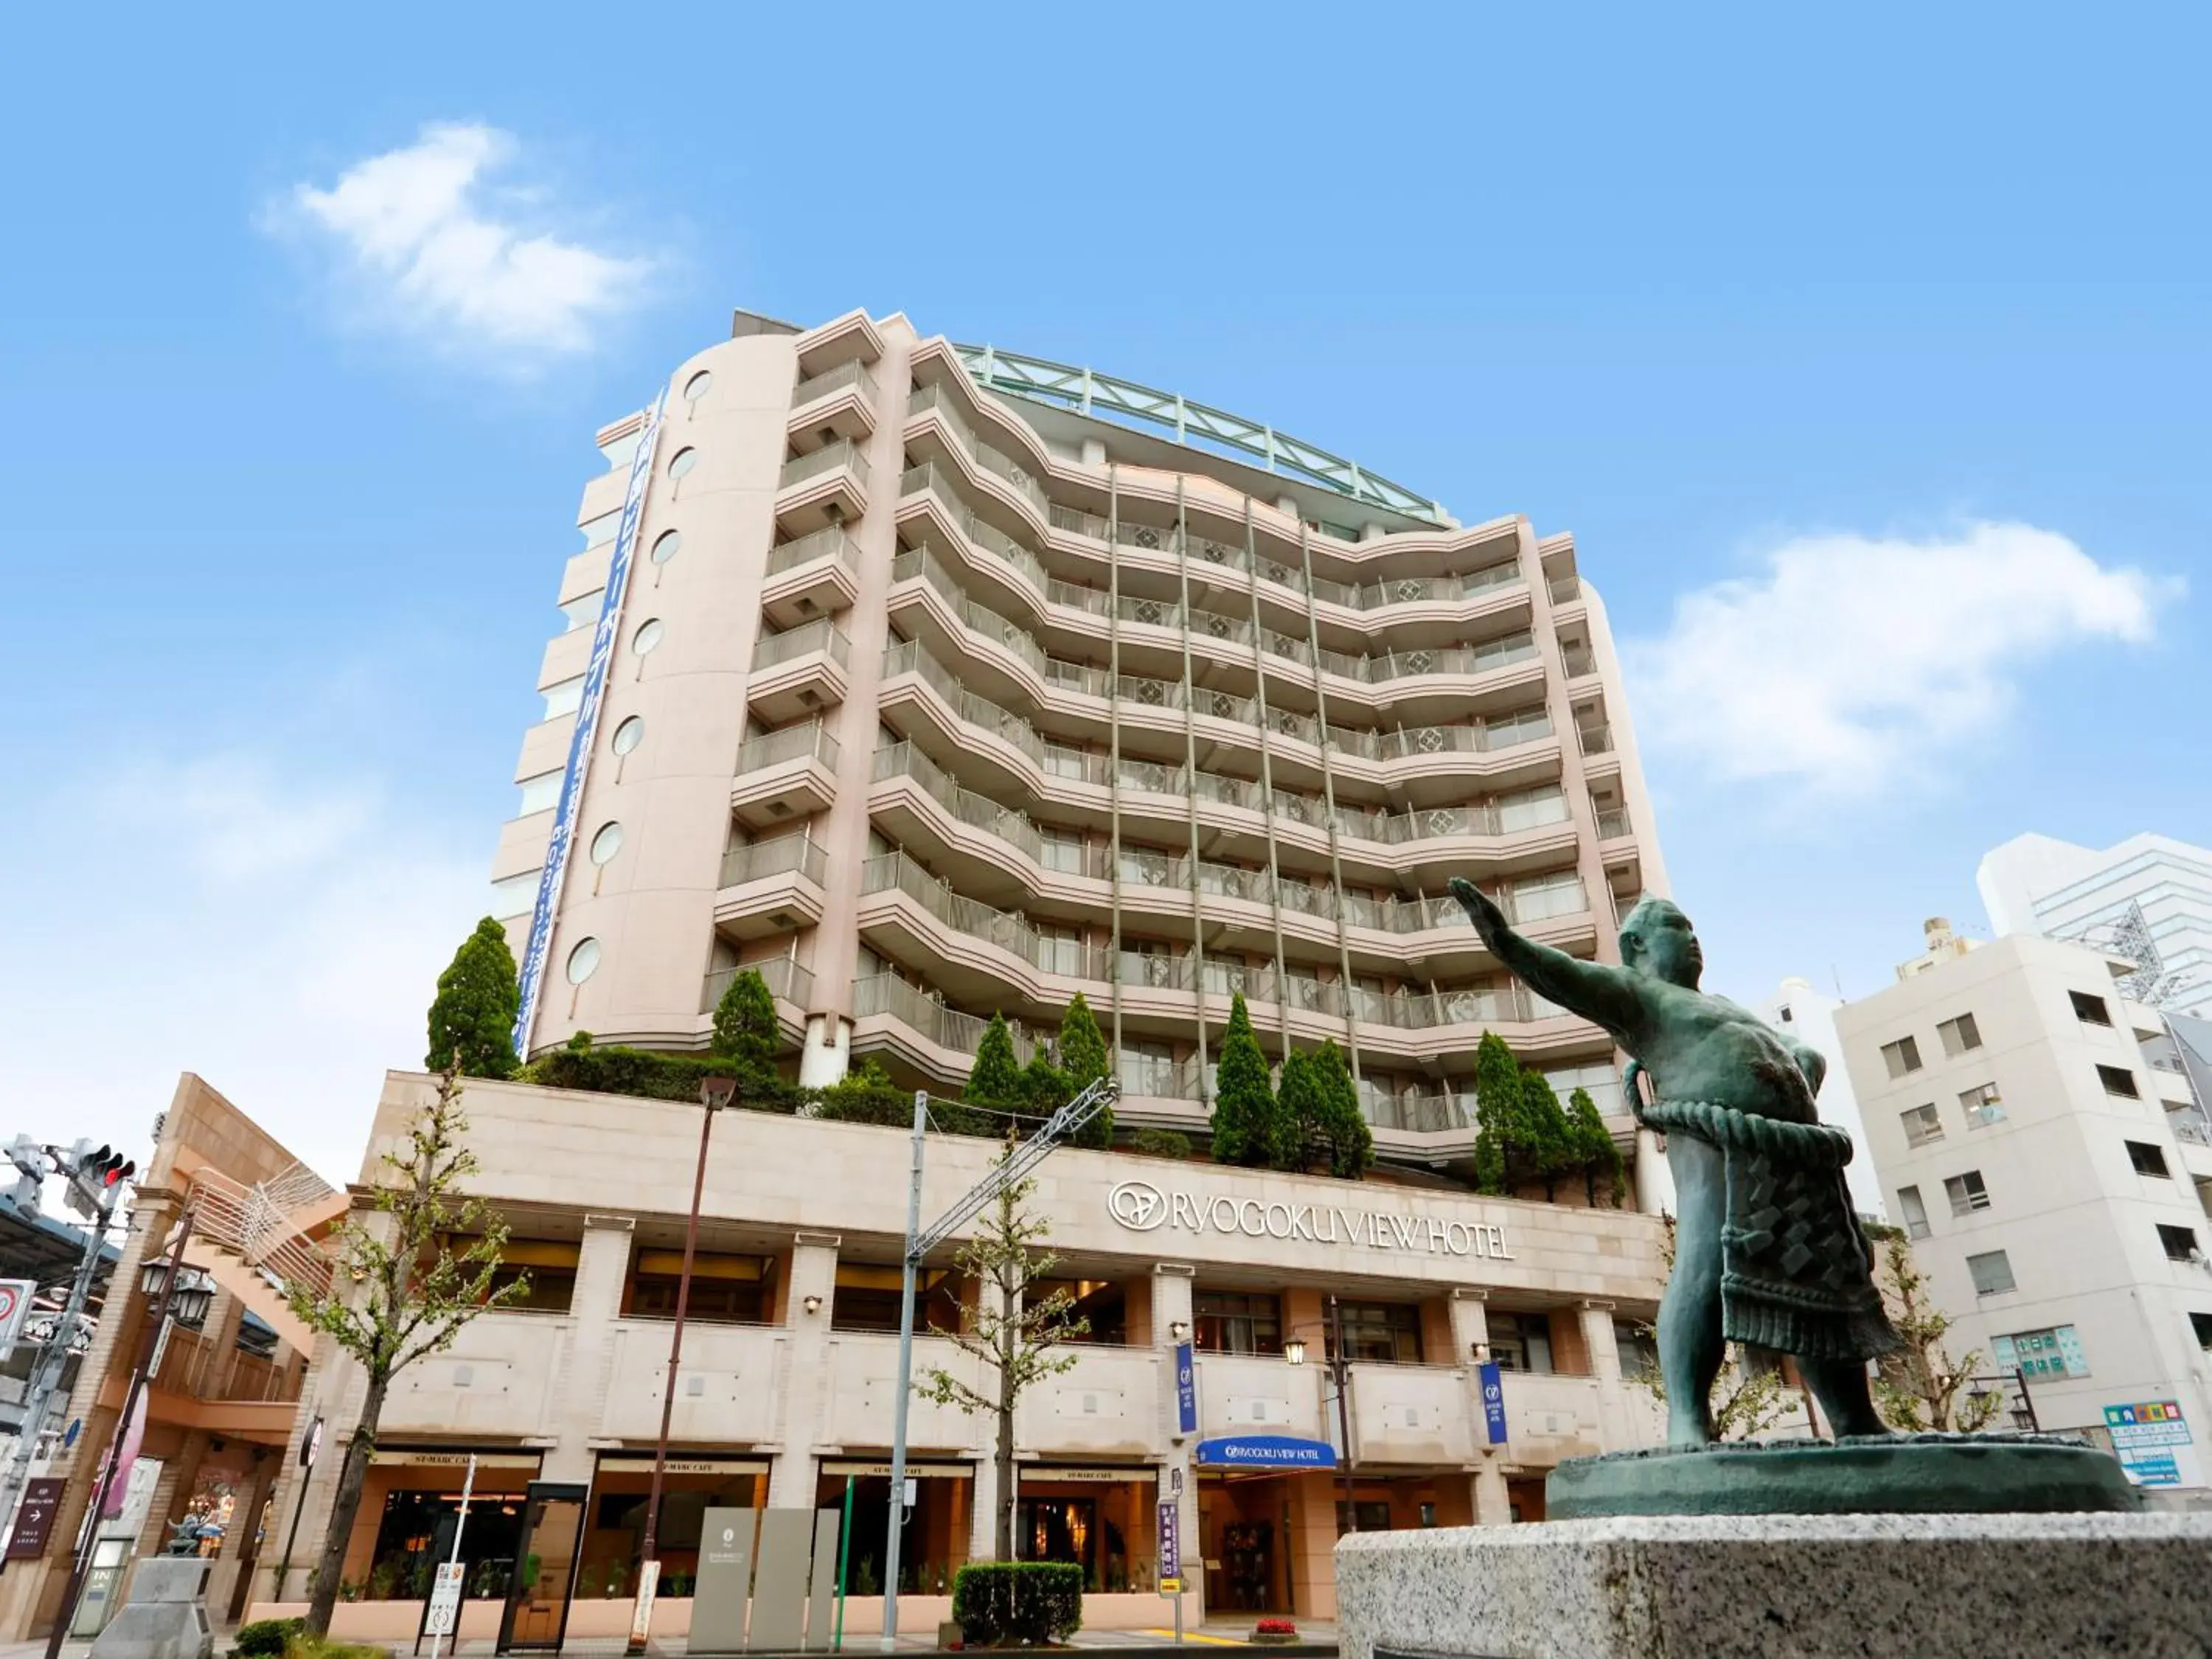 Property Building in Ryogoku View Hotel